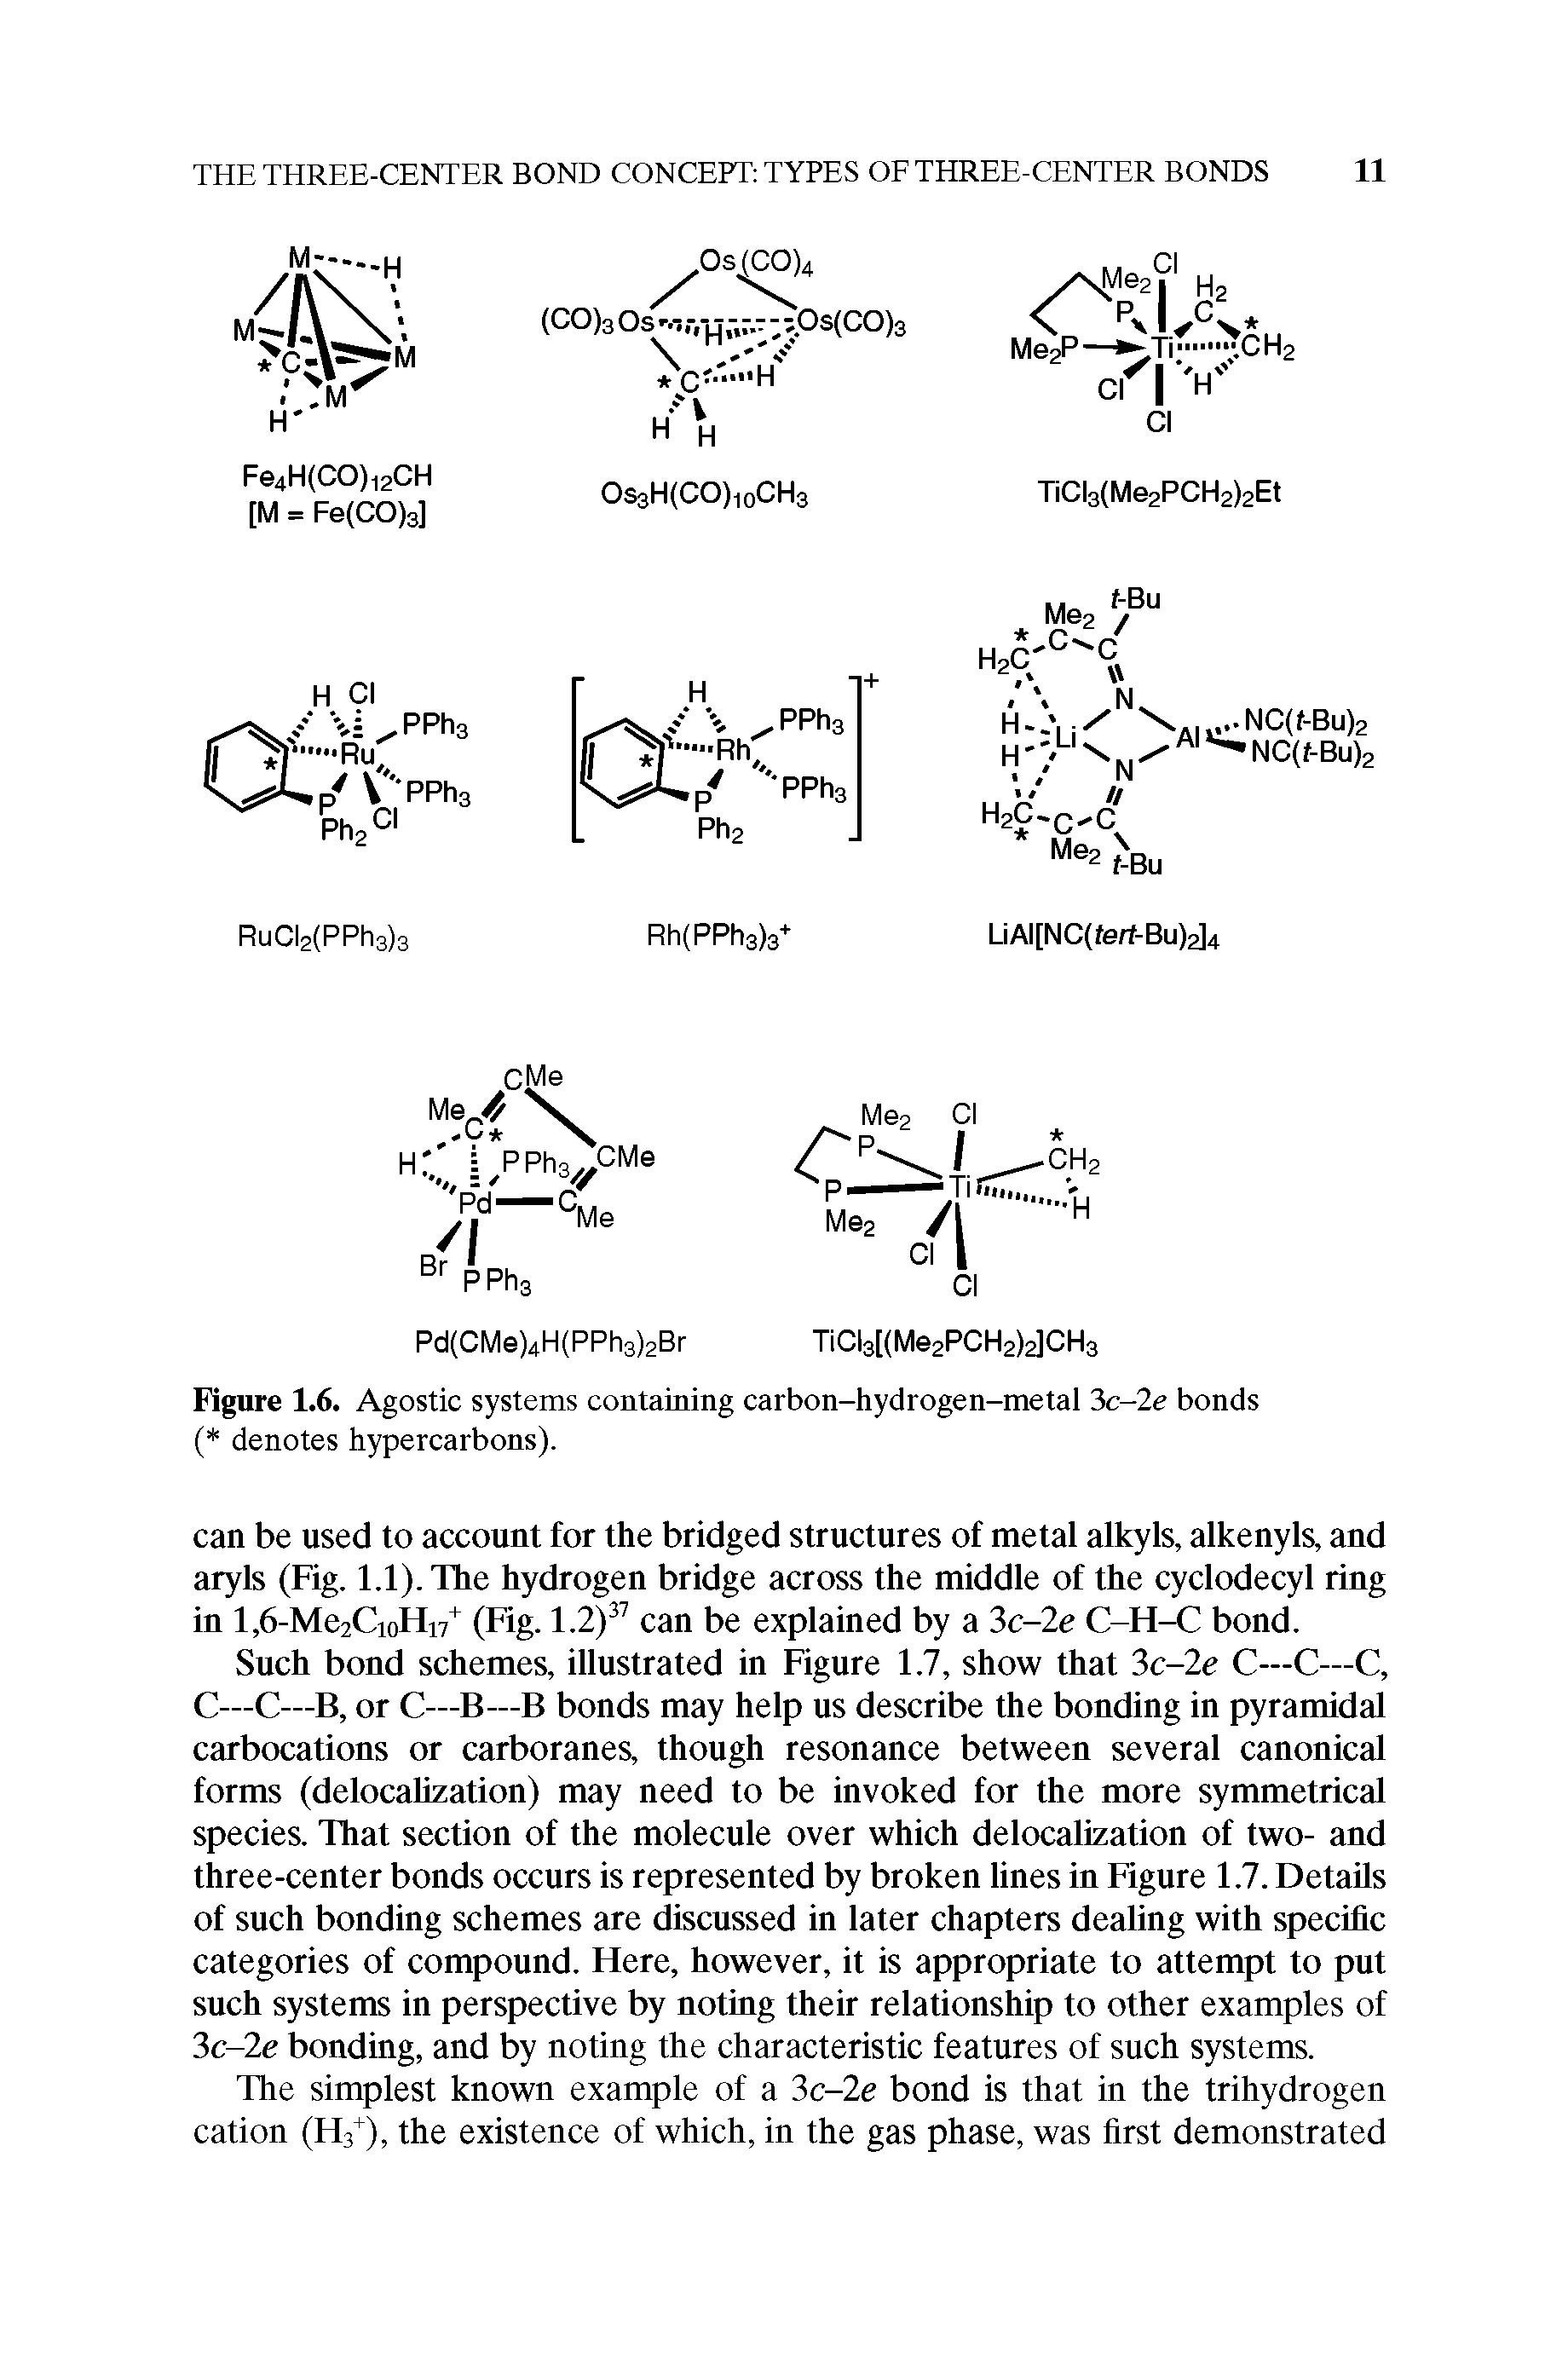 Figure 1.6. Agostic systems containing carbon-hydrogen-metal 3c-2e bonds ( denotes hypercarbons).